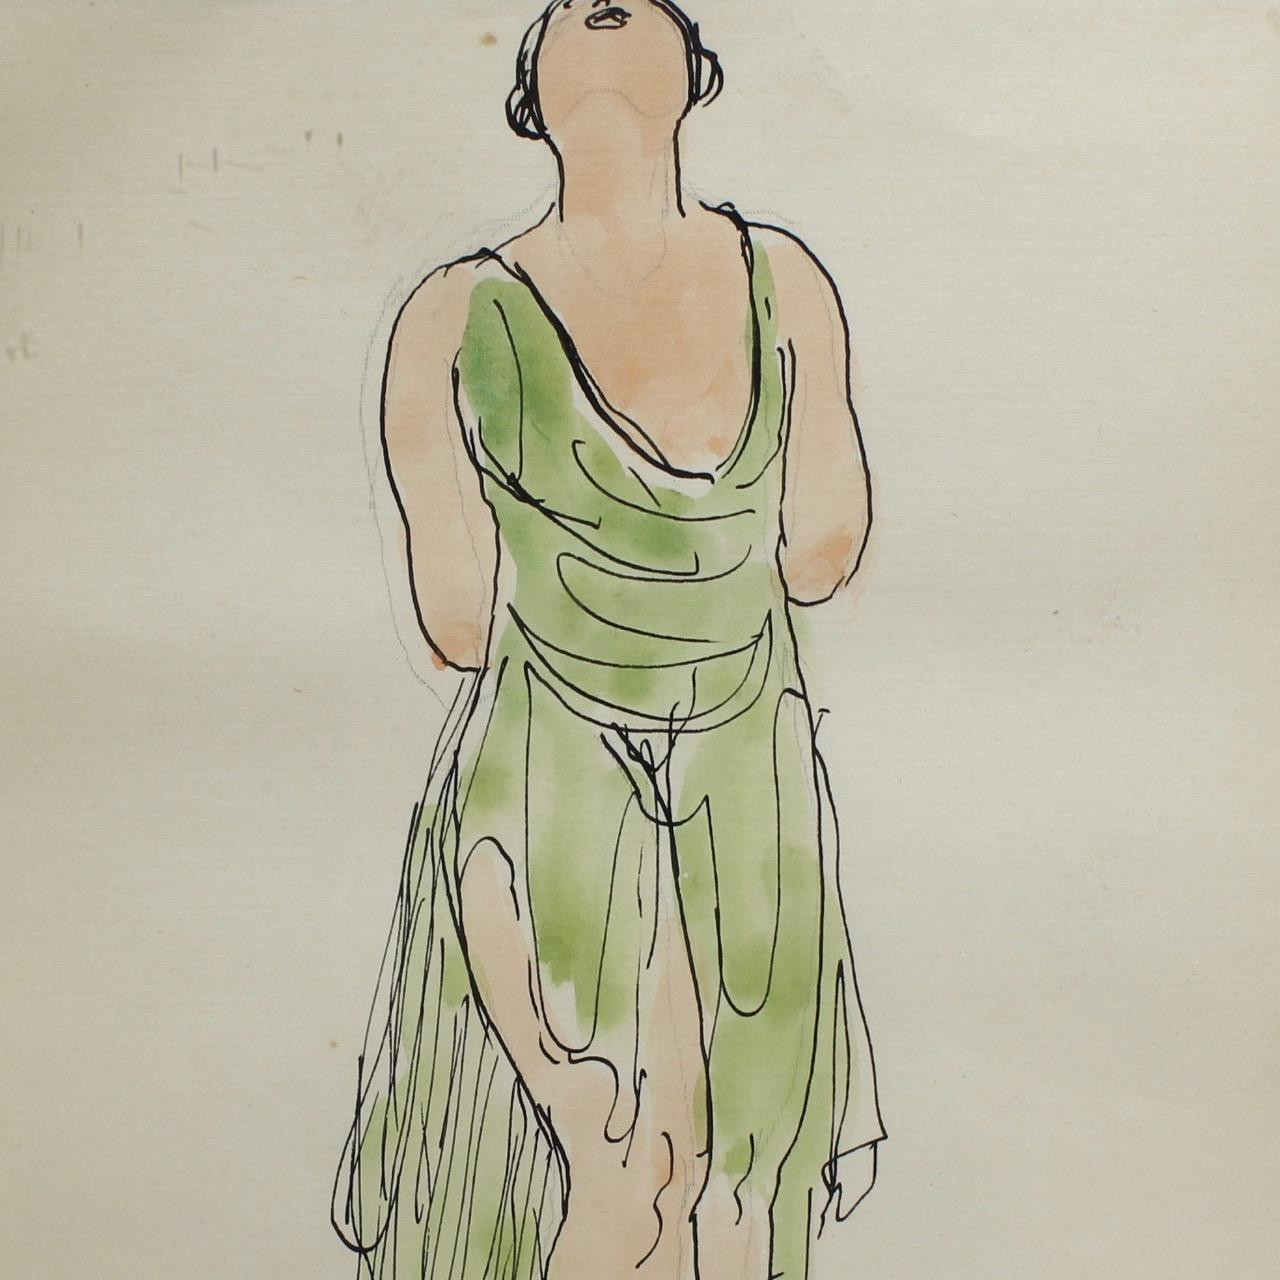 American Abraham Walkowitz Ink Drawing of Ballet Dancer Isadora Duncan in Green